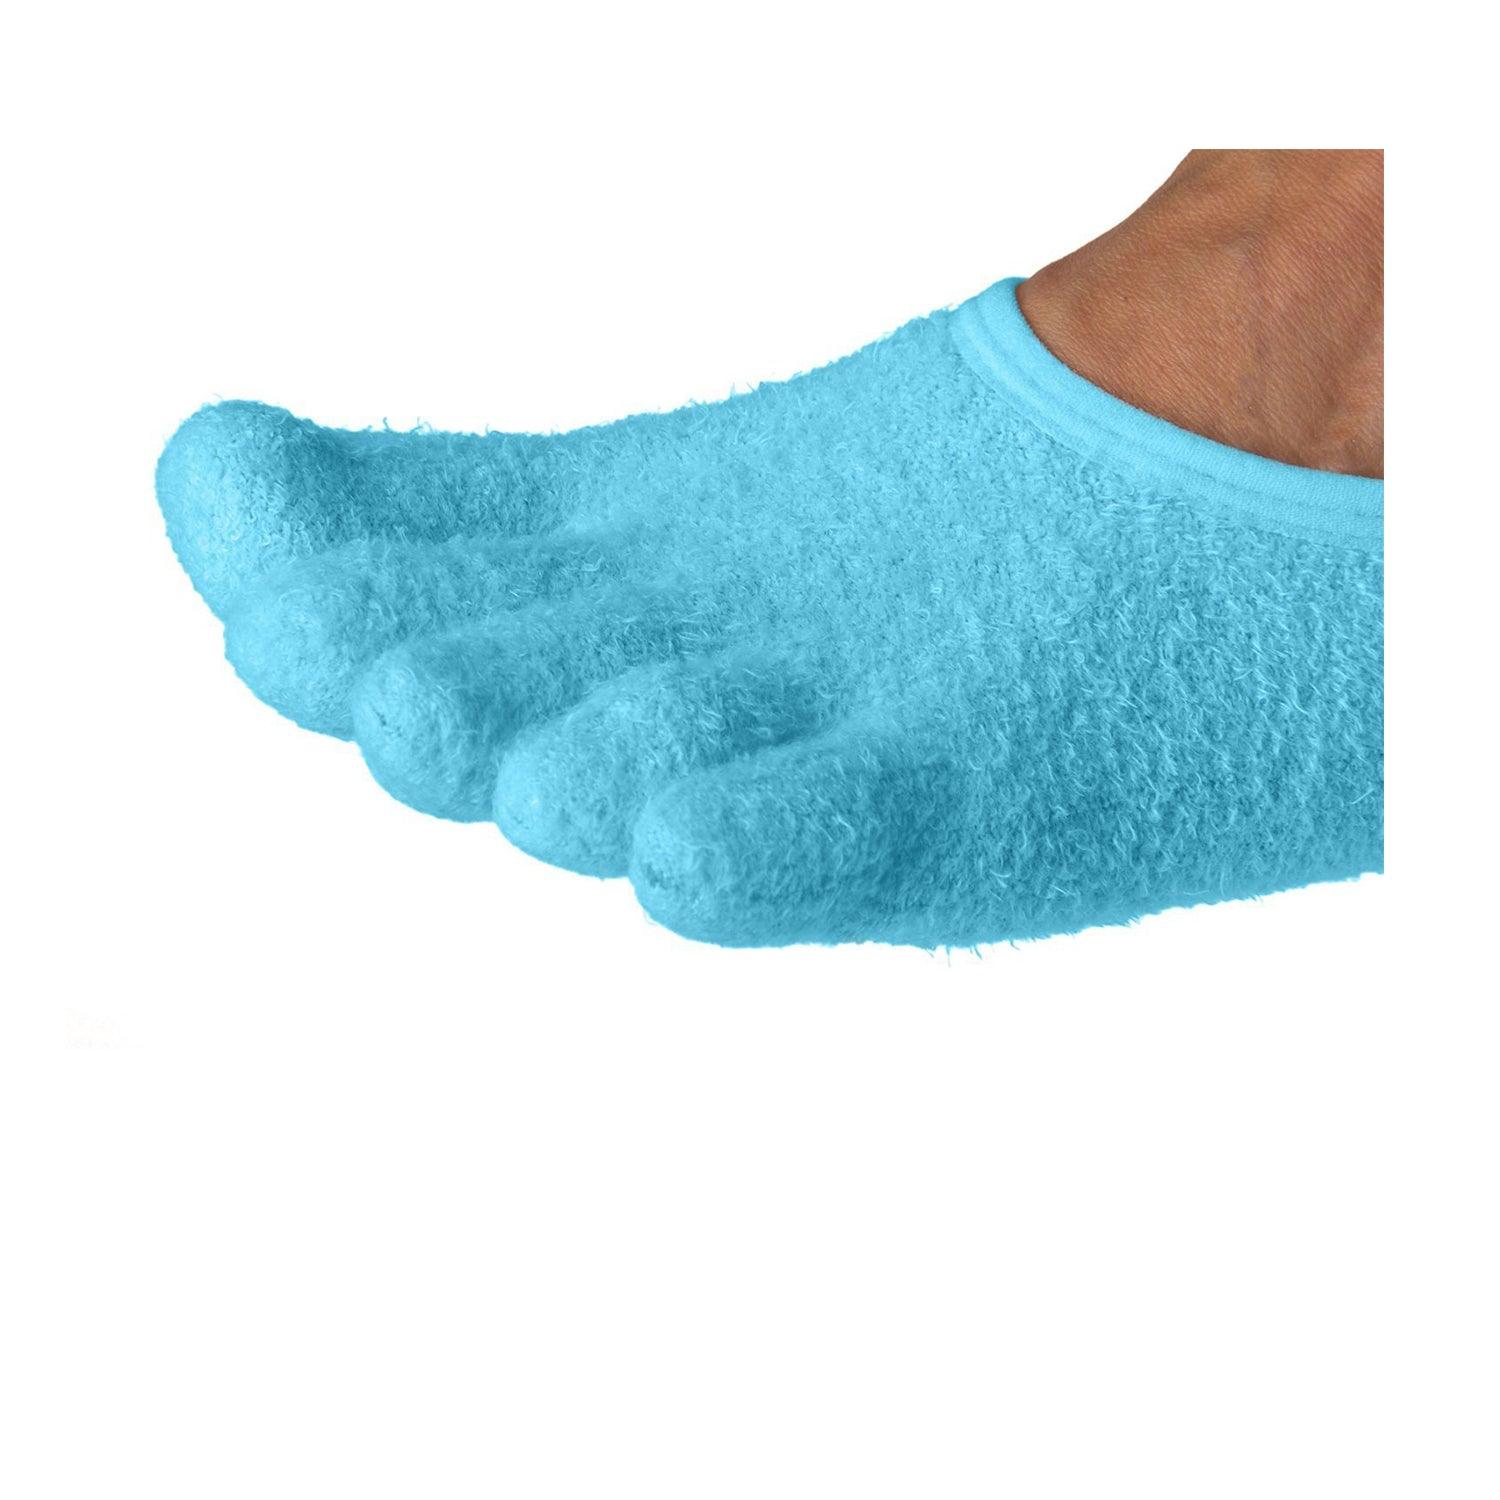  NatraCure 5-Toe Gel Lined Foot Moisturizing Socks – Aloe &  Shea Infused Fuzzy Hydrating Socks for Women & Men - Soft Feet Moisturizer  Spa & Pedicure Socks for Dry Cracked